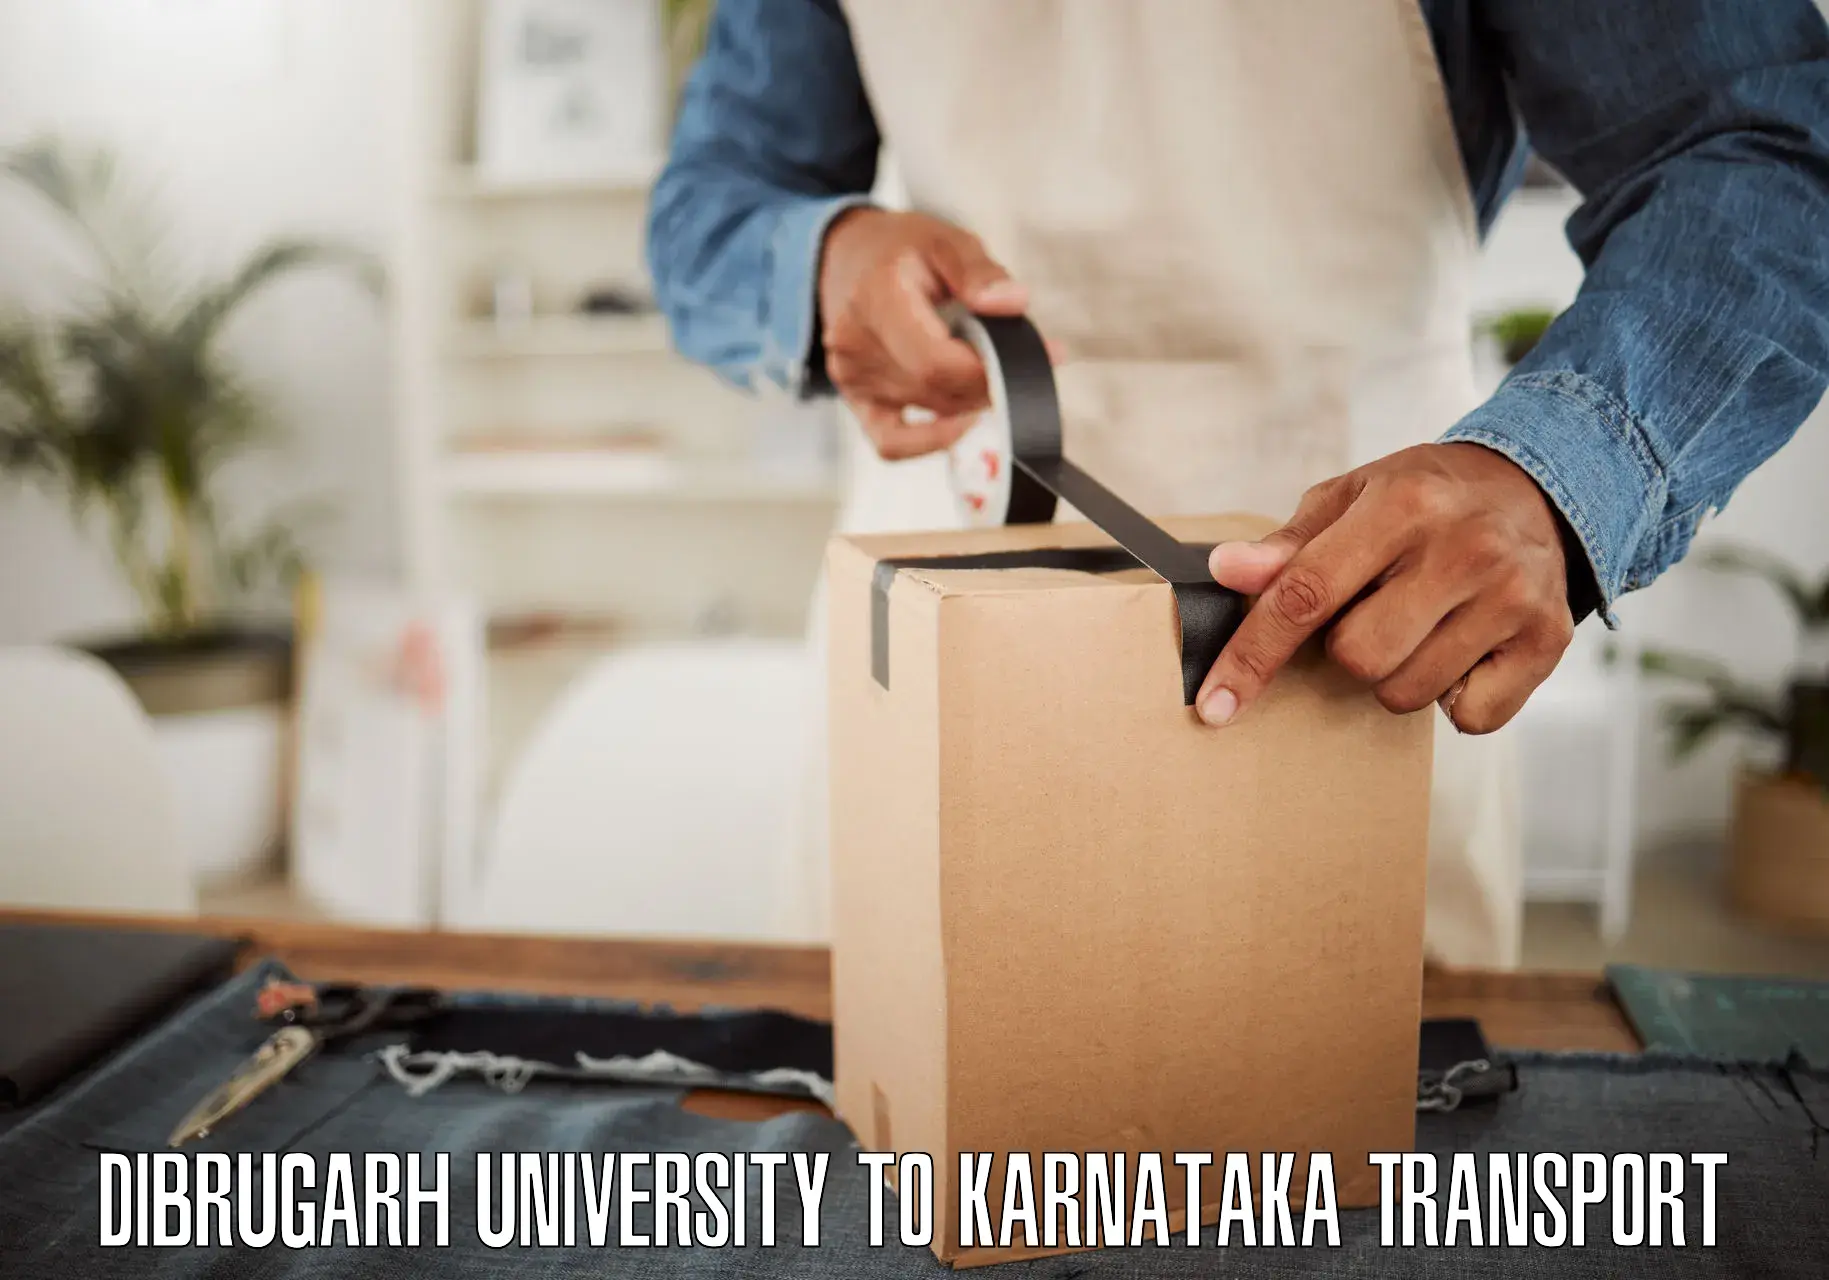 Vehicle transport services Dibrugarh University to Mysore University